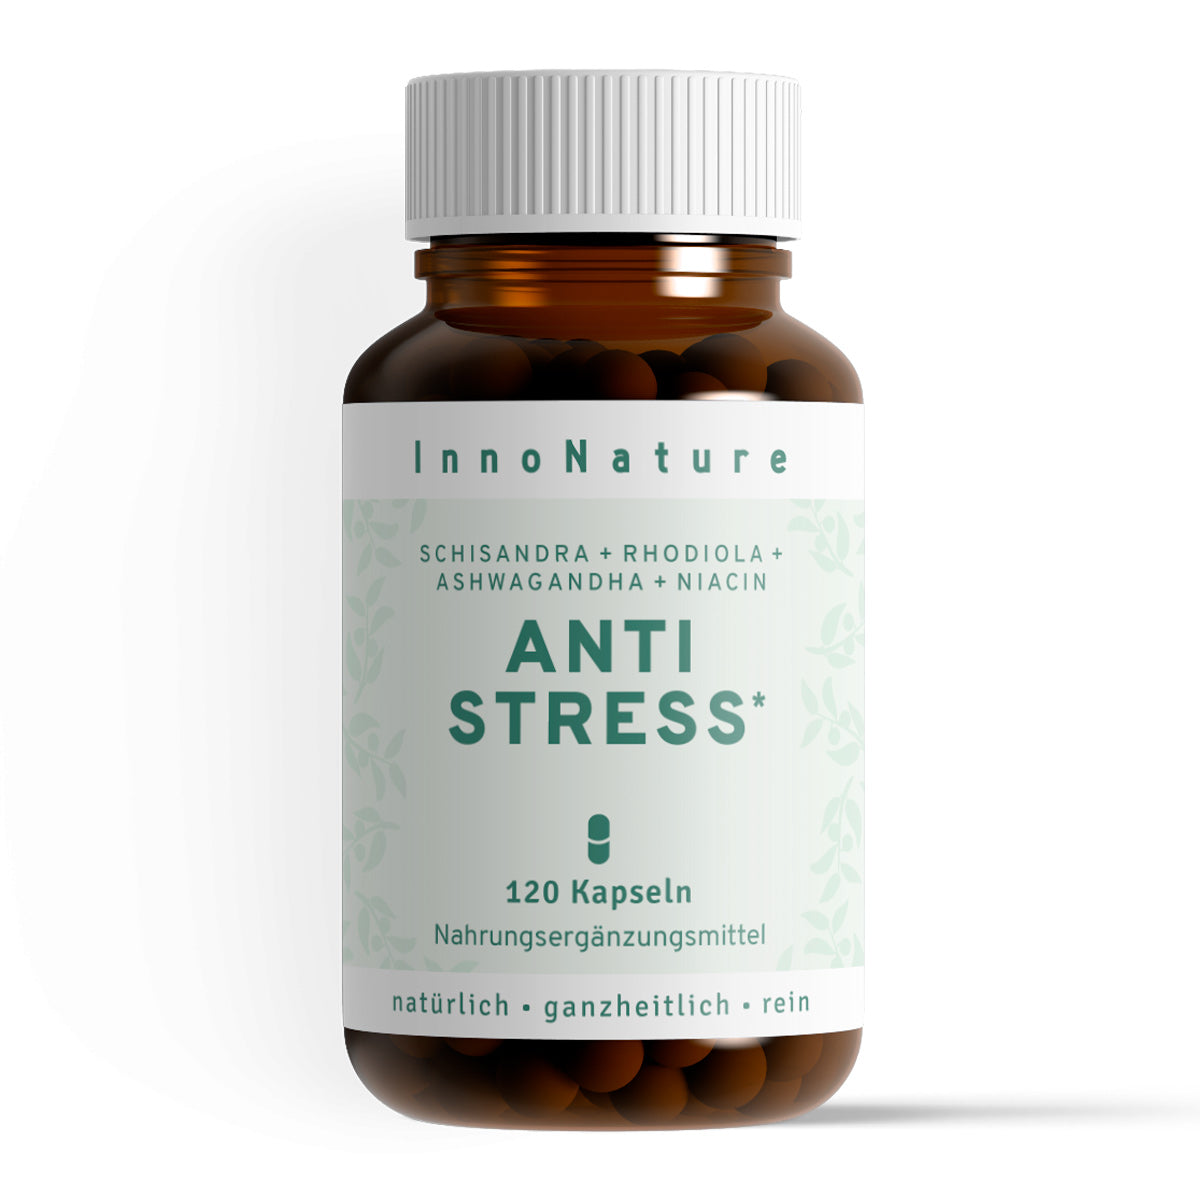 Anti Stress Capsules: Schisandra, Rhodiola, Ashwagandha, Vitamin B12